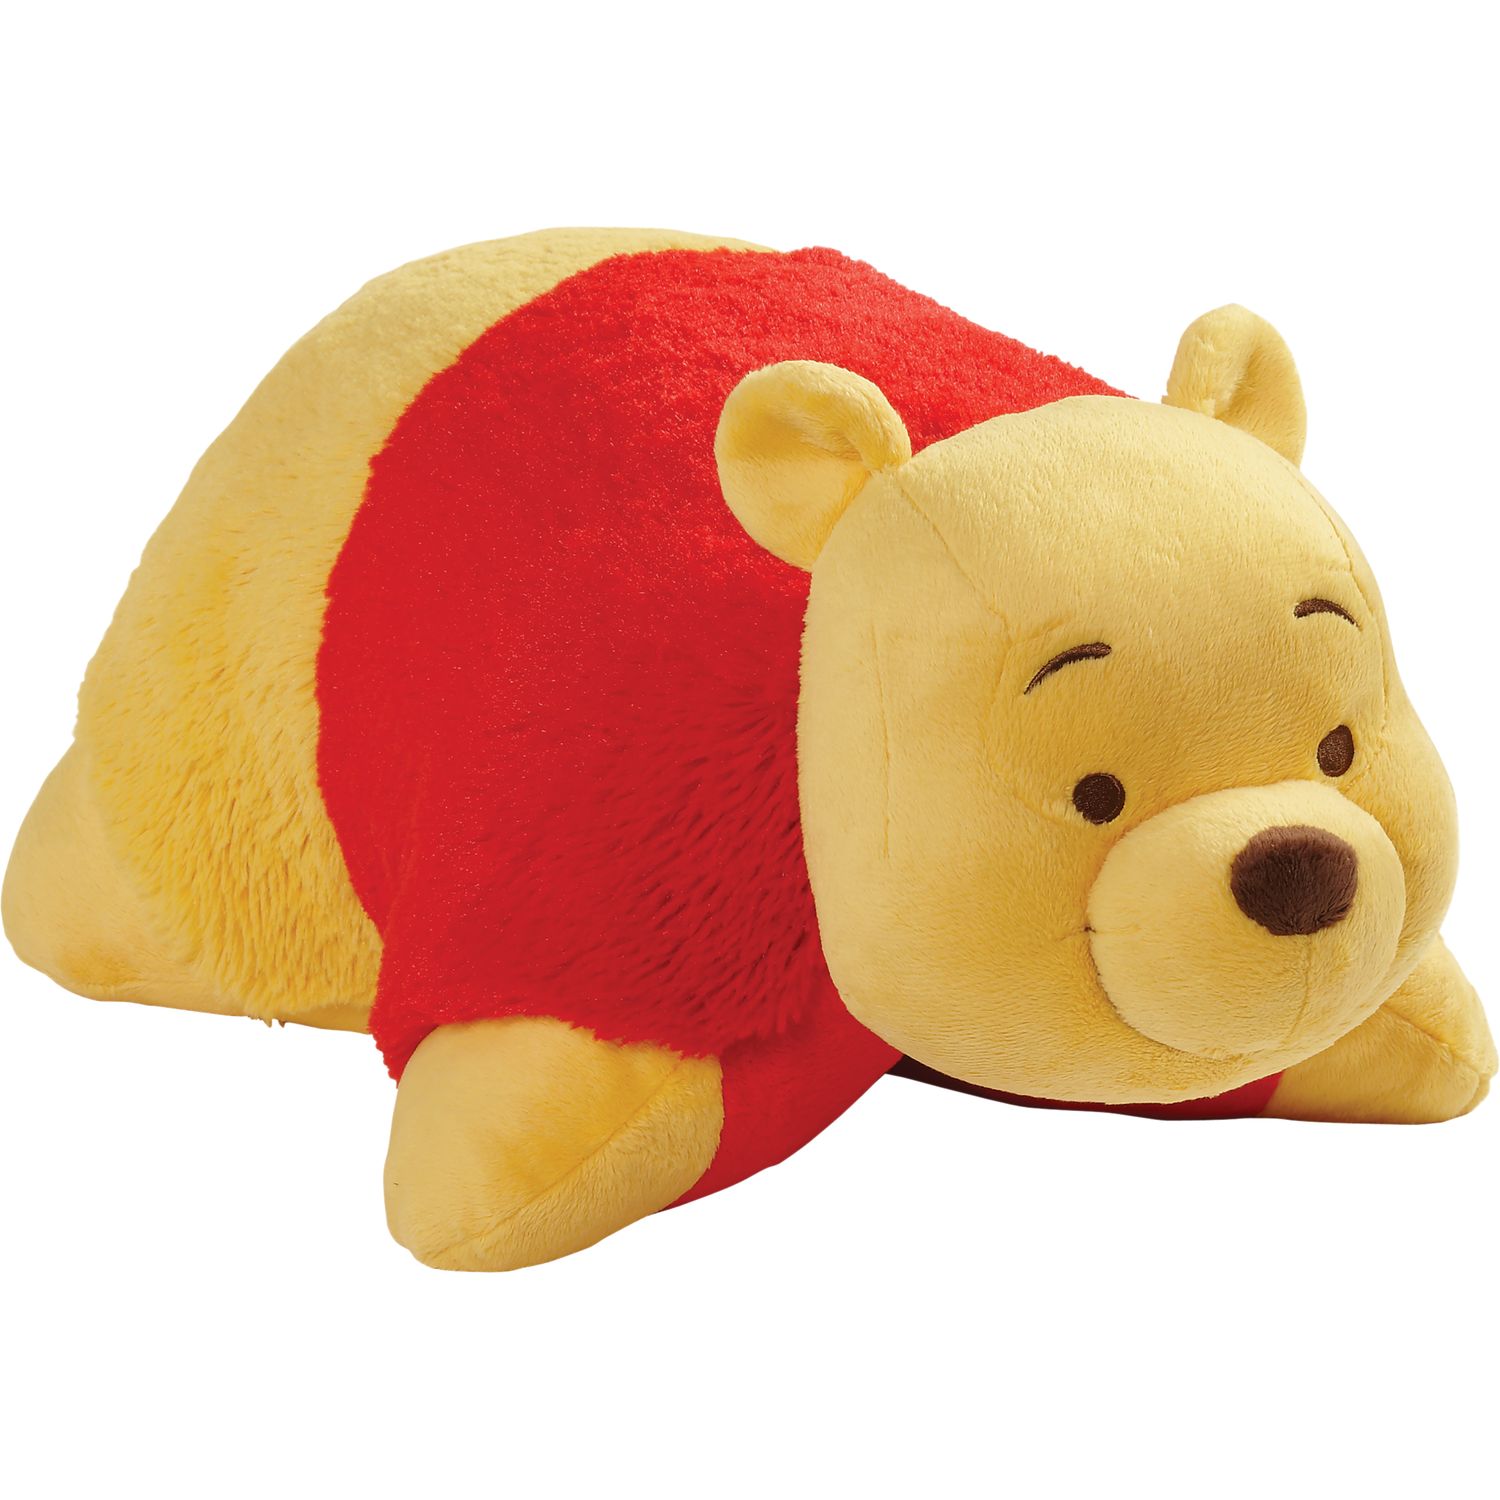 baby pooh stuffed animal